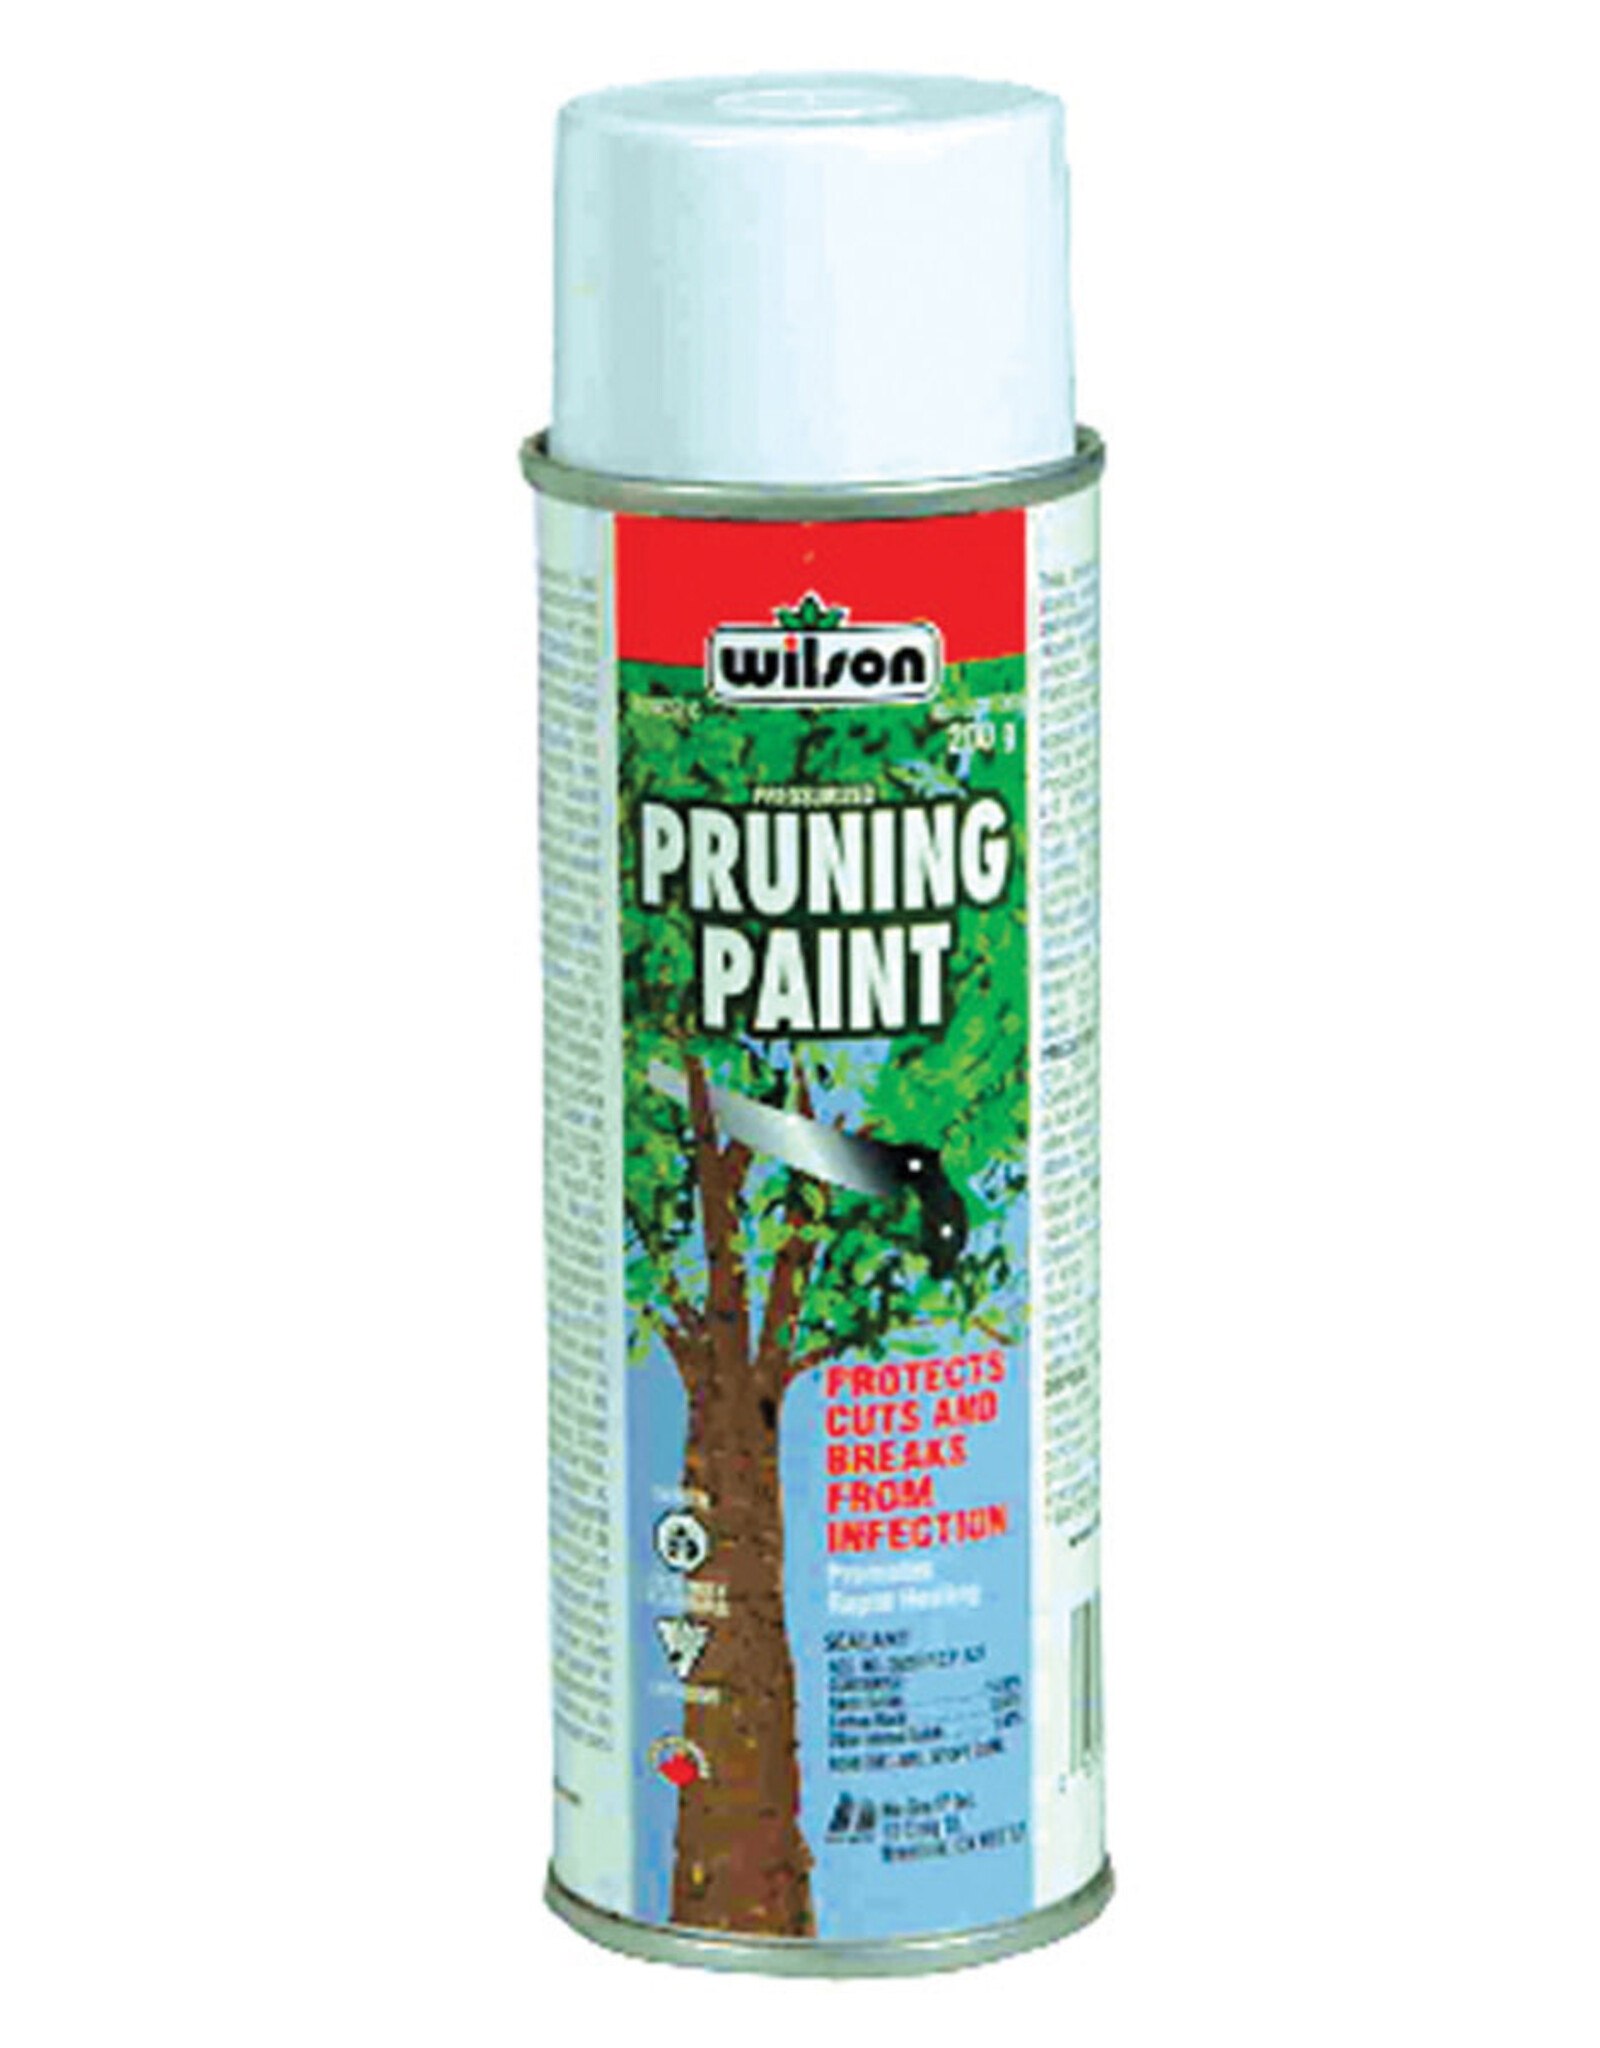 Wilson Pruning Paint 200g